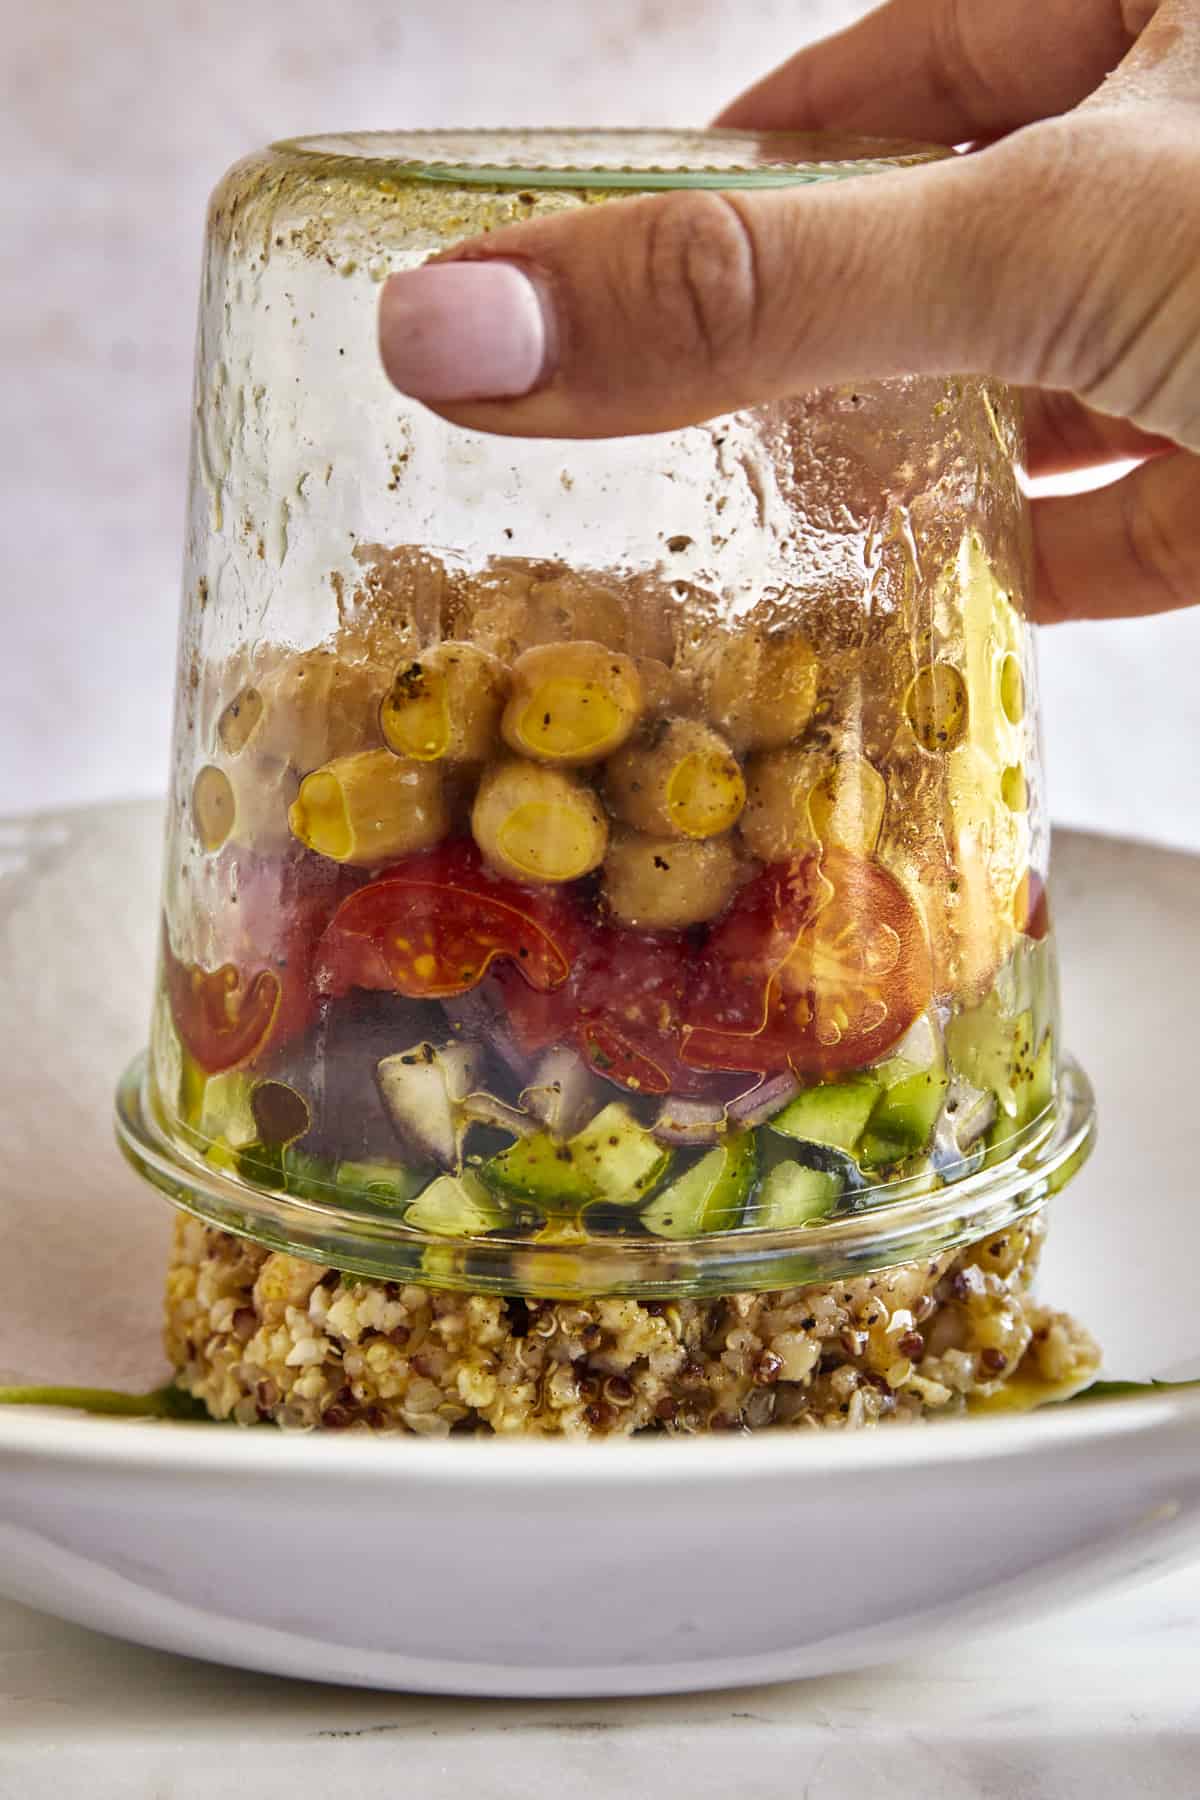 Mason Jar Salad (Meal Prep Recipe) - Food Dolls